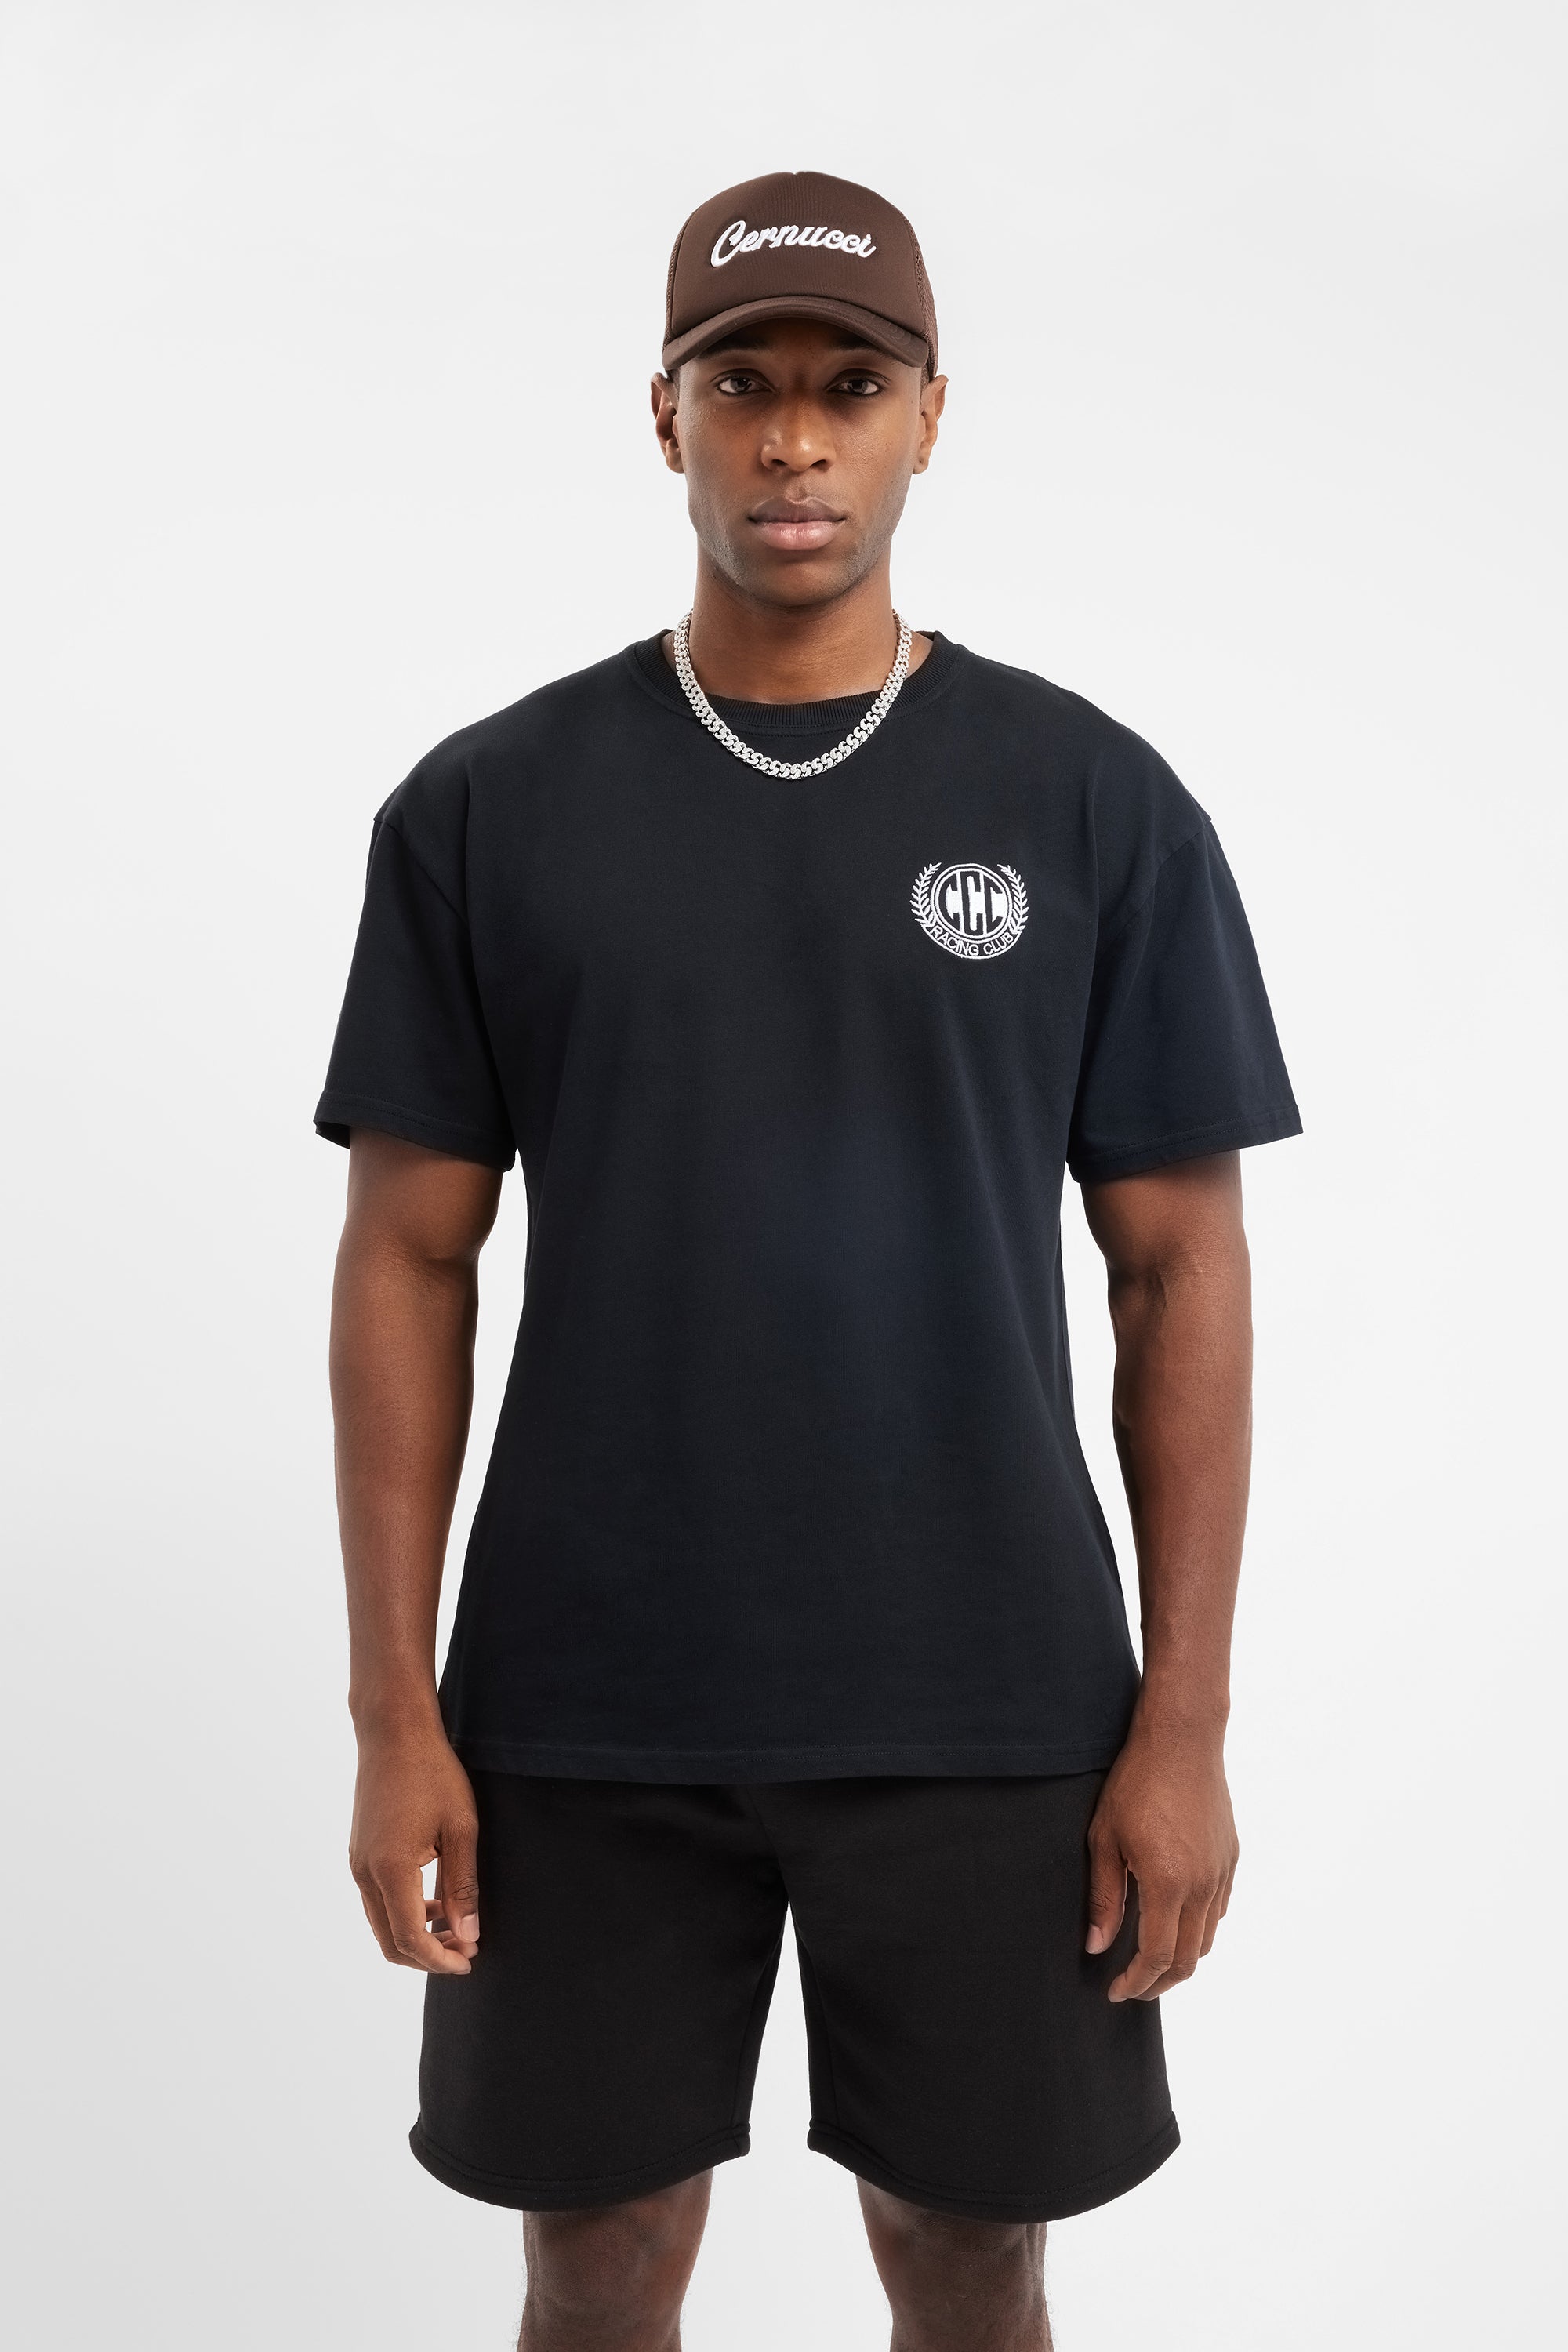 Oversized Racing Club Crest T-Shirt - Black – Cernucci